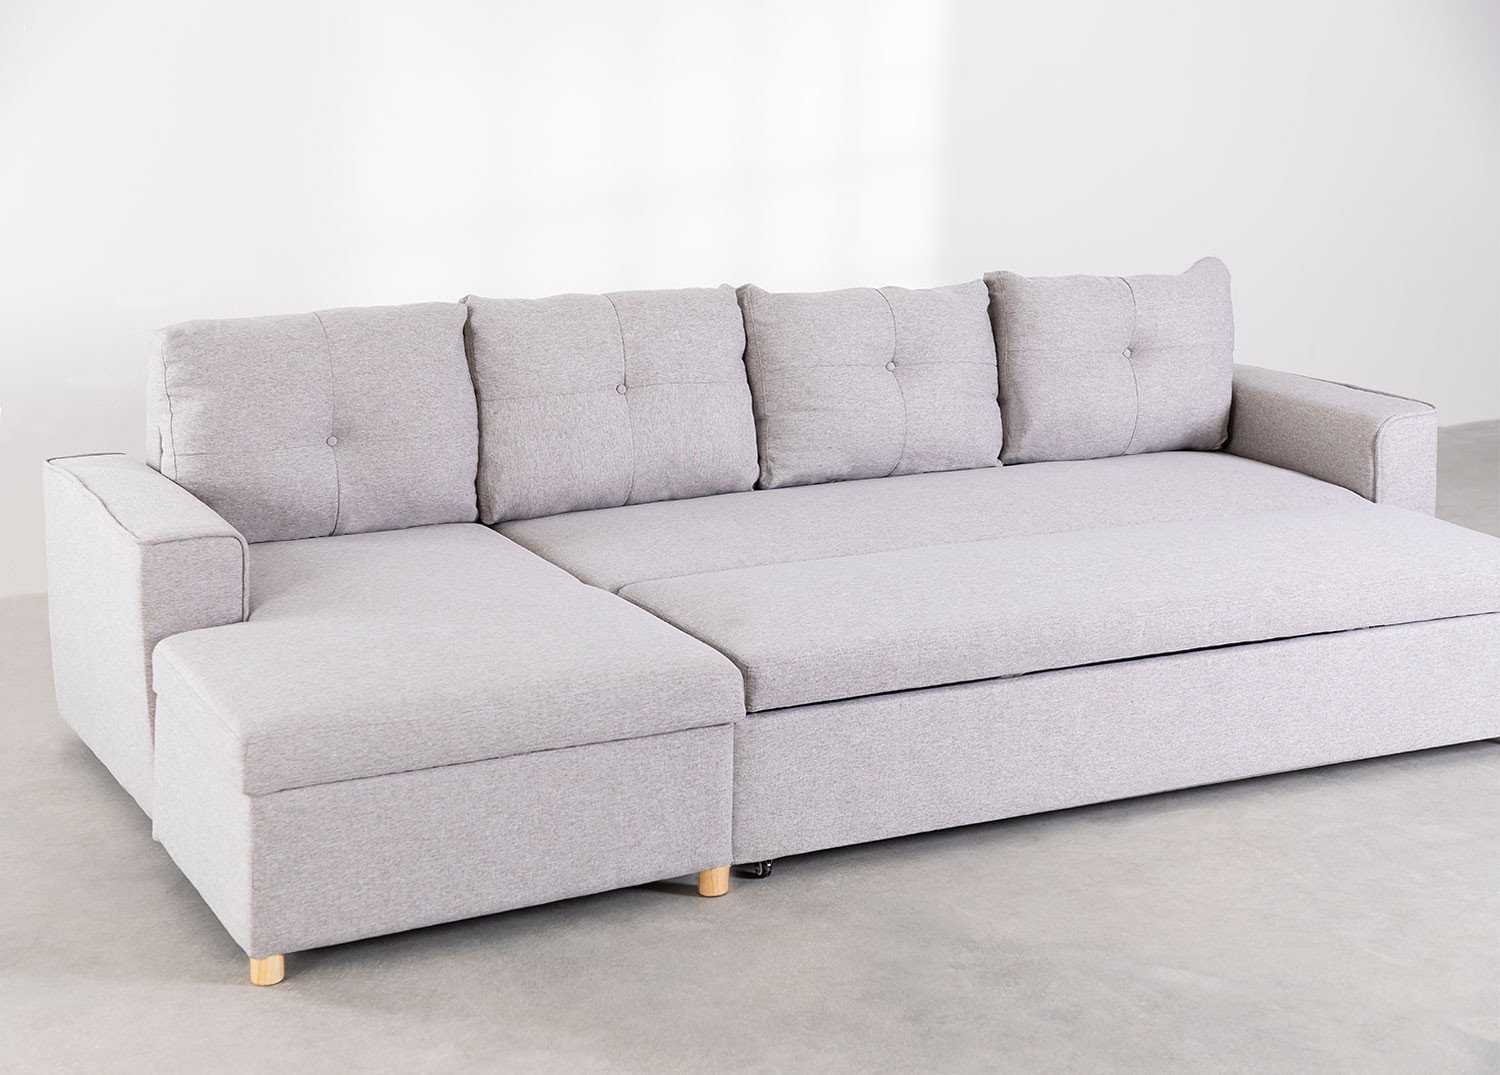 chaise longue sofa bed canada